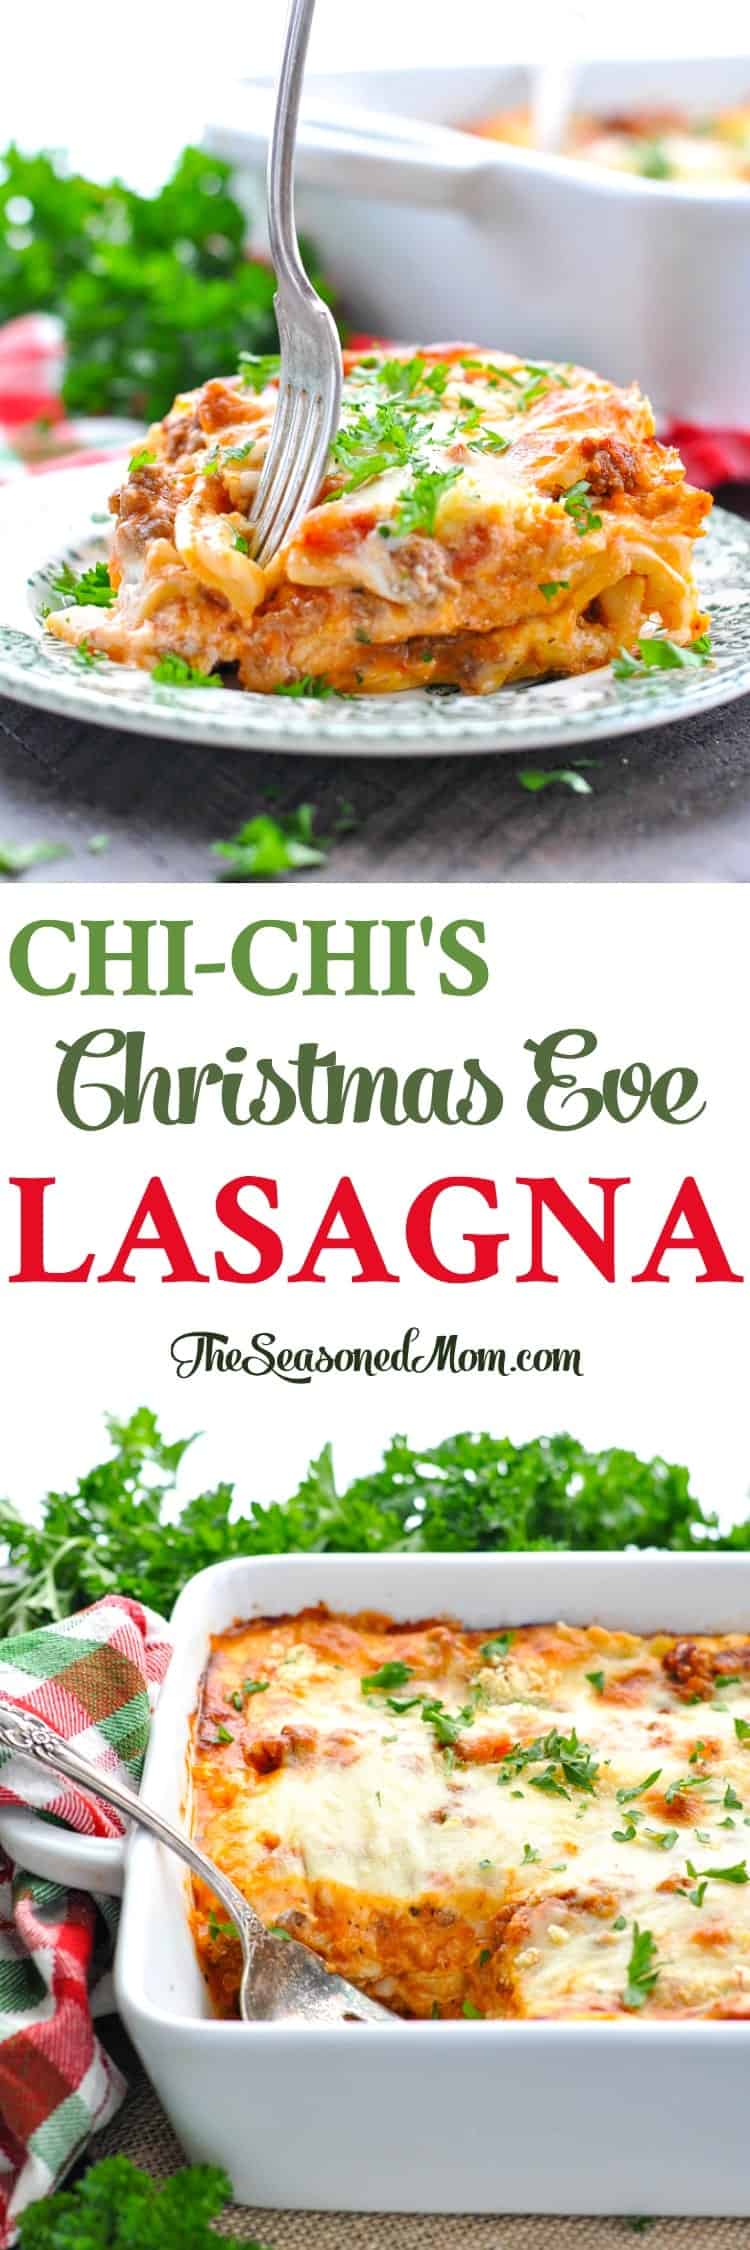 Chi-Chi's Christmas Eve Lasagna Recipe - The Seasoned Mom